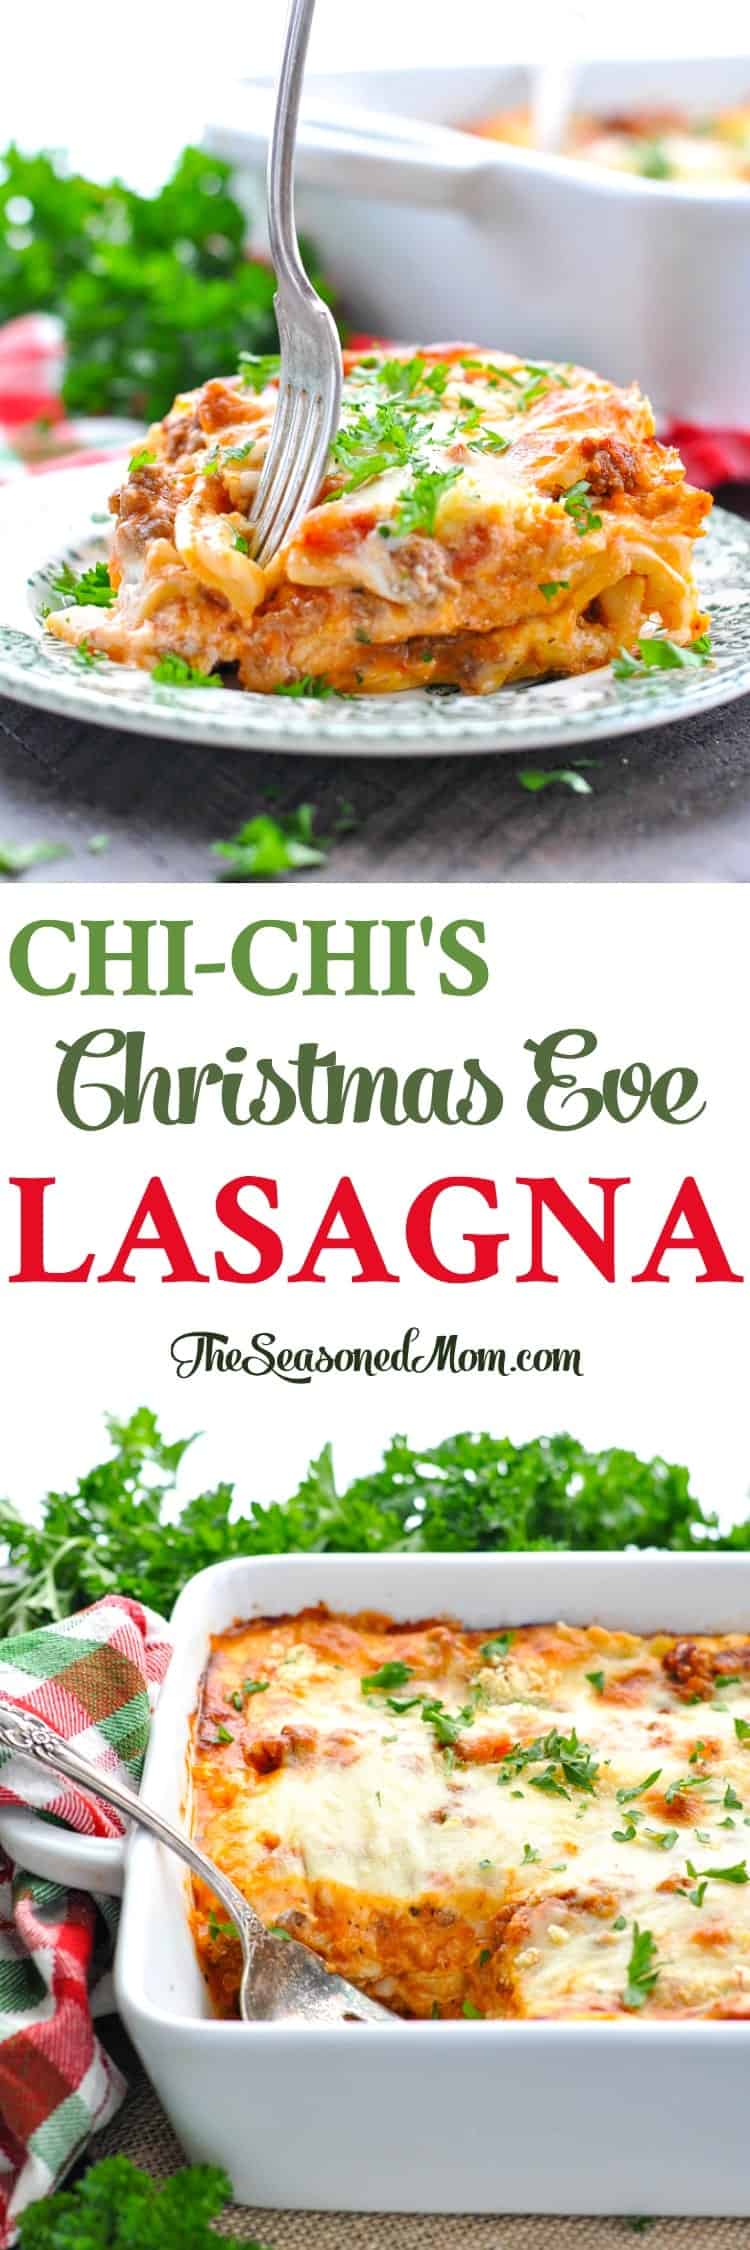 Chi-Chi's Christmas Eve Lasagna Recipe - The Seasoned Mom